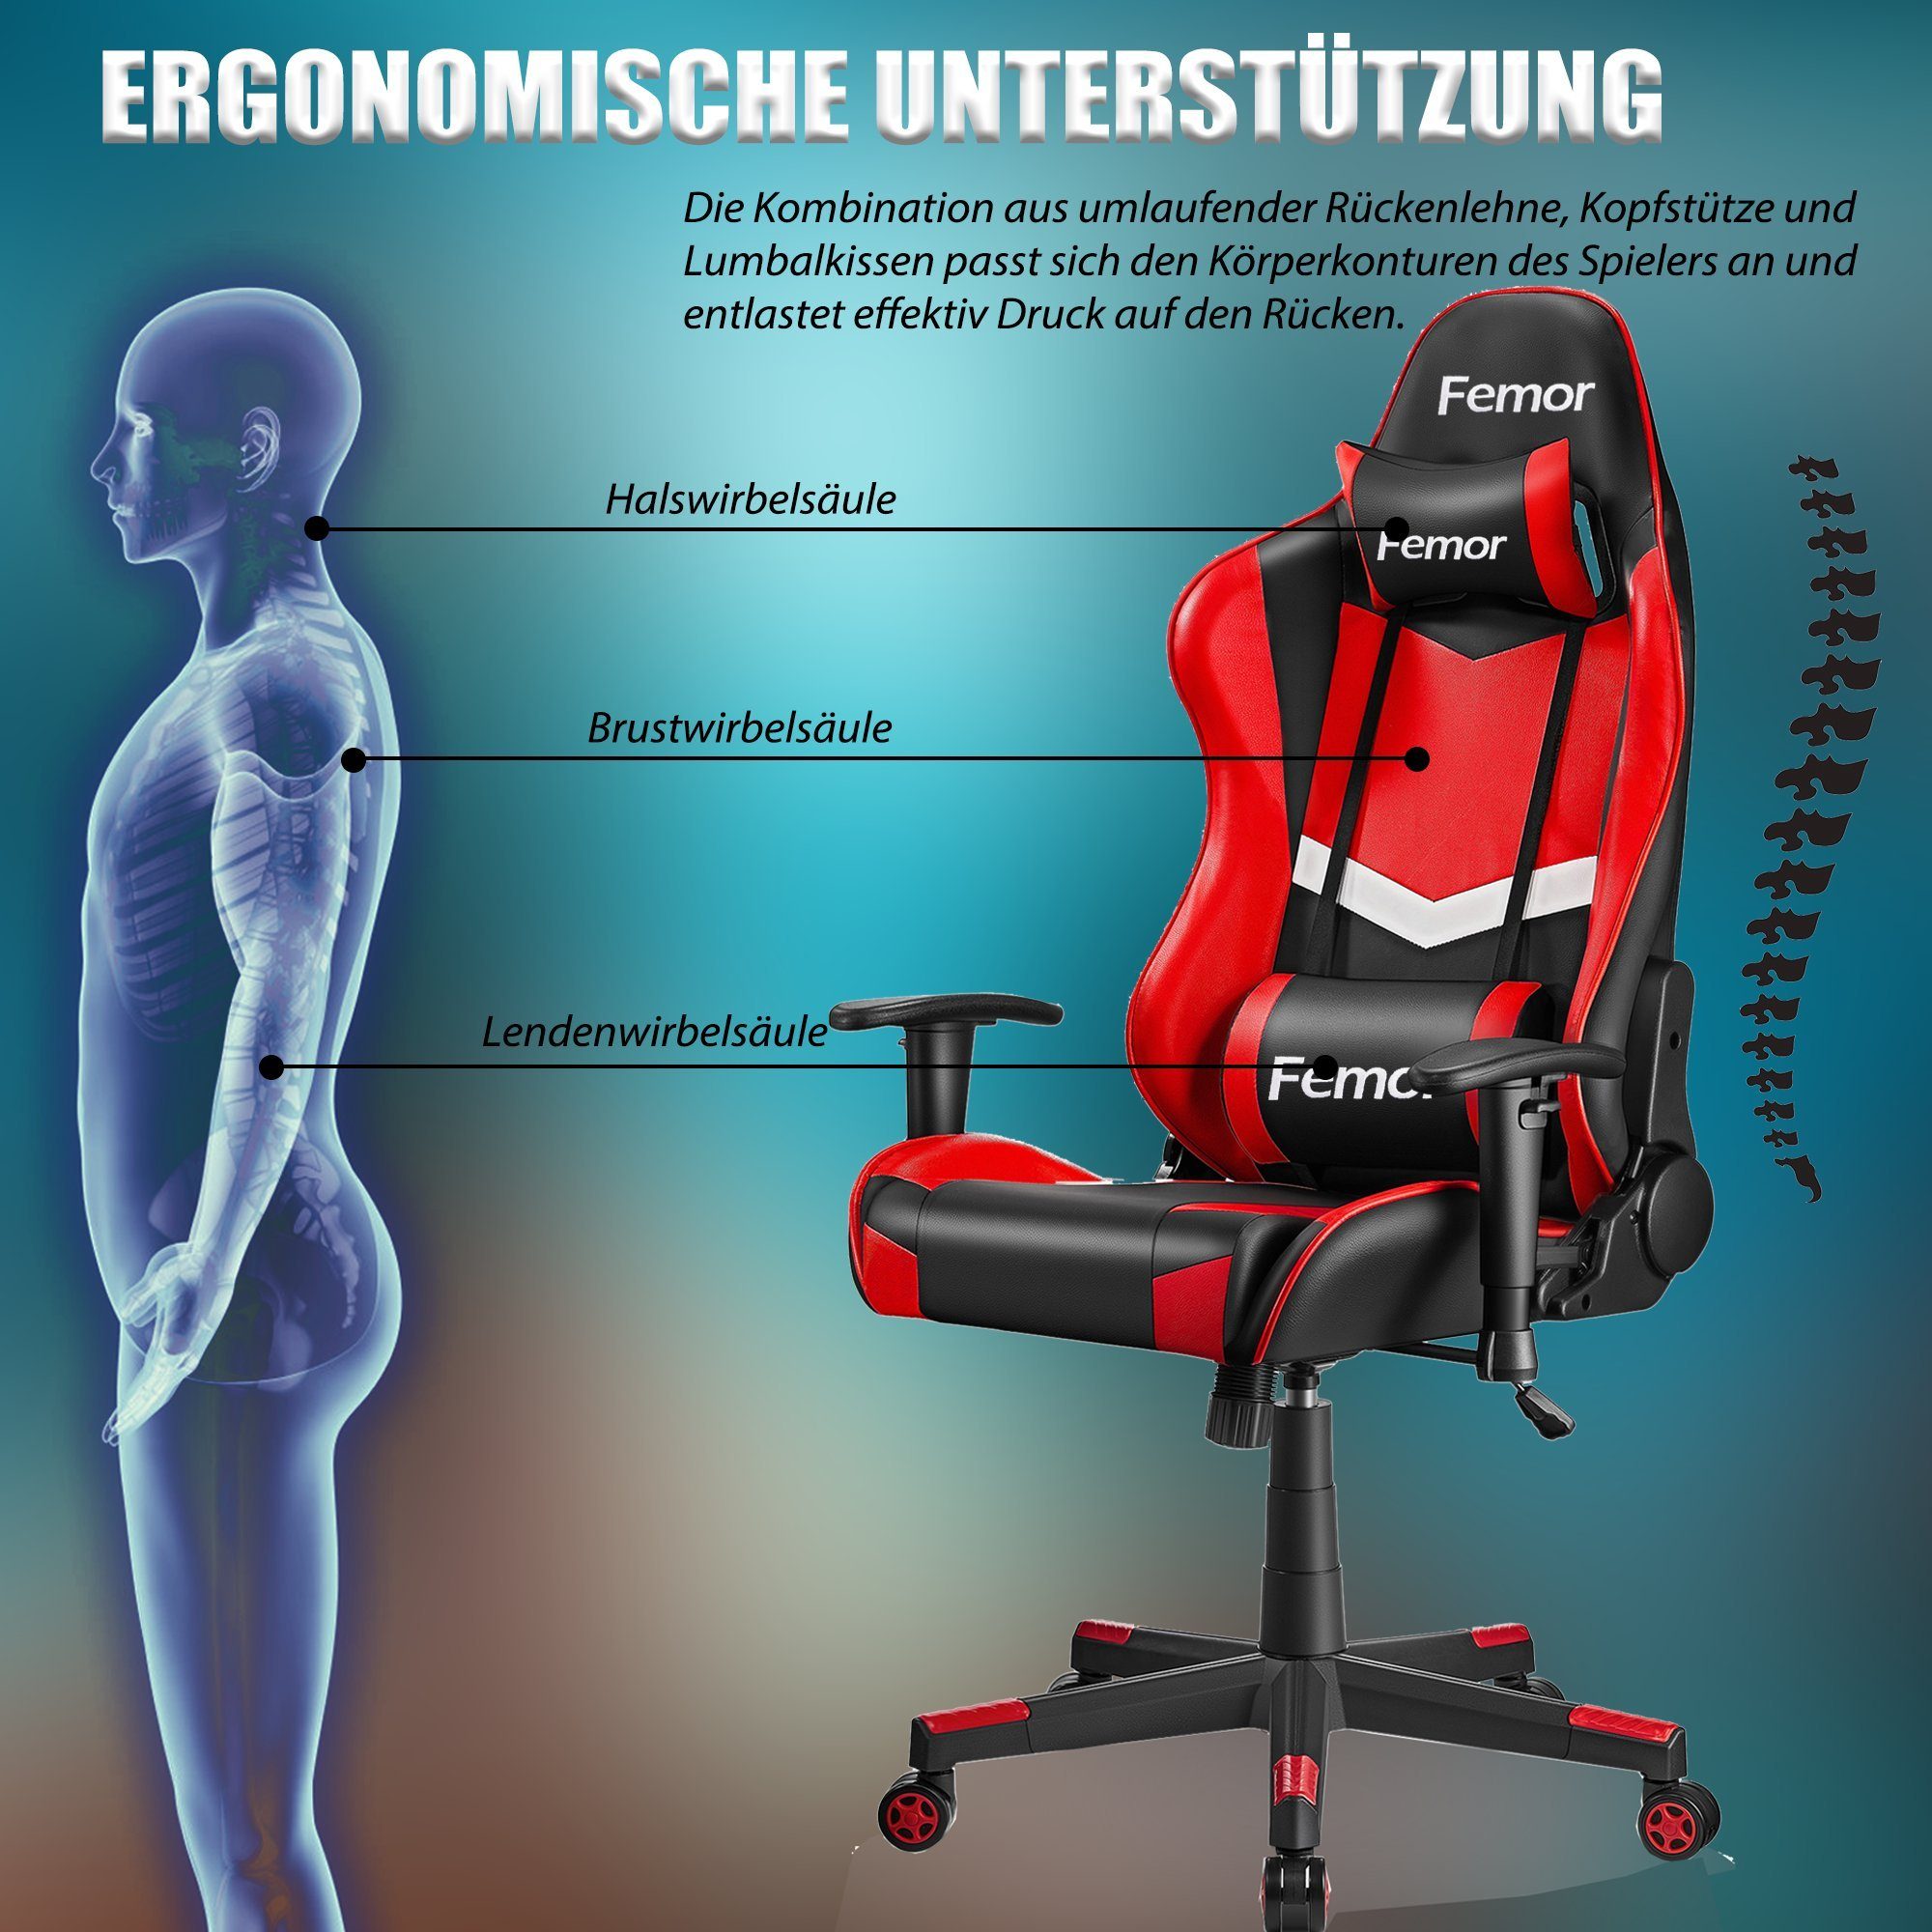 90°-160° Chair Stuhl, rot Gaming Femor Gaming Neigungswinkel Gamer Stuhl